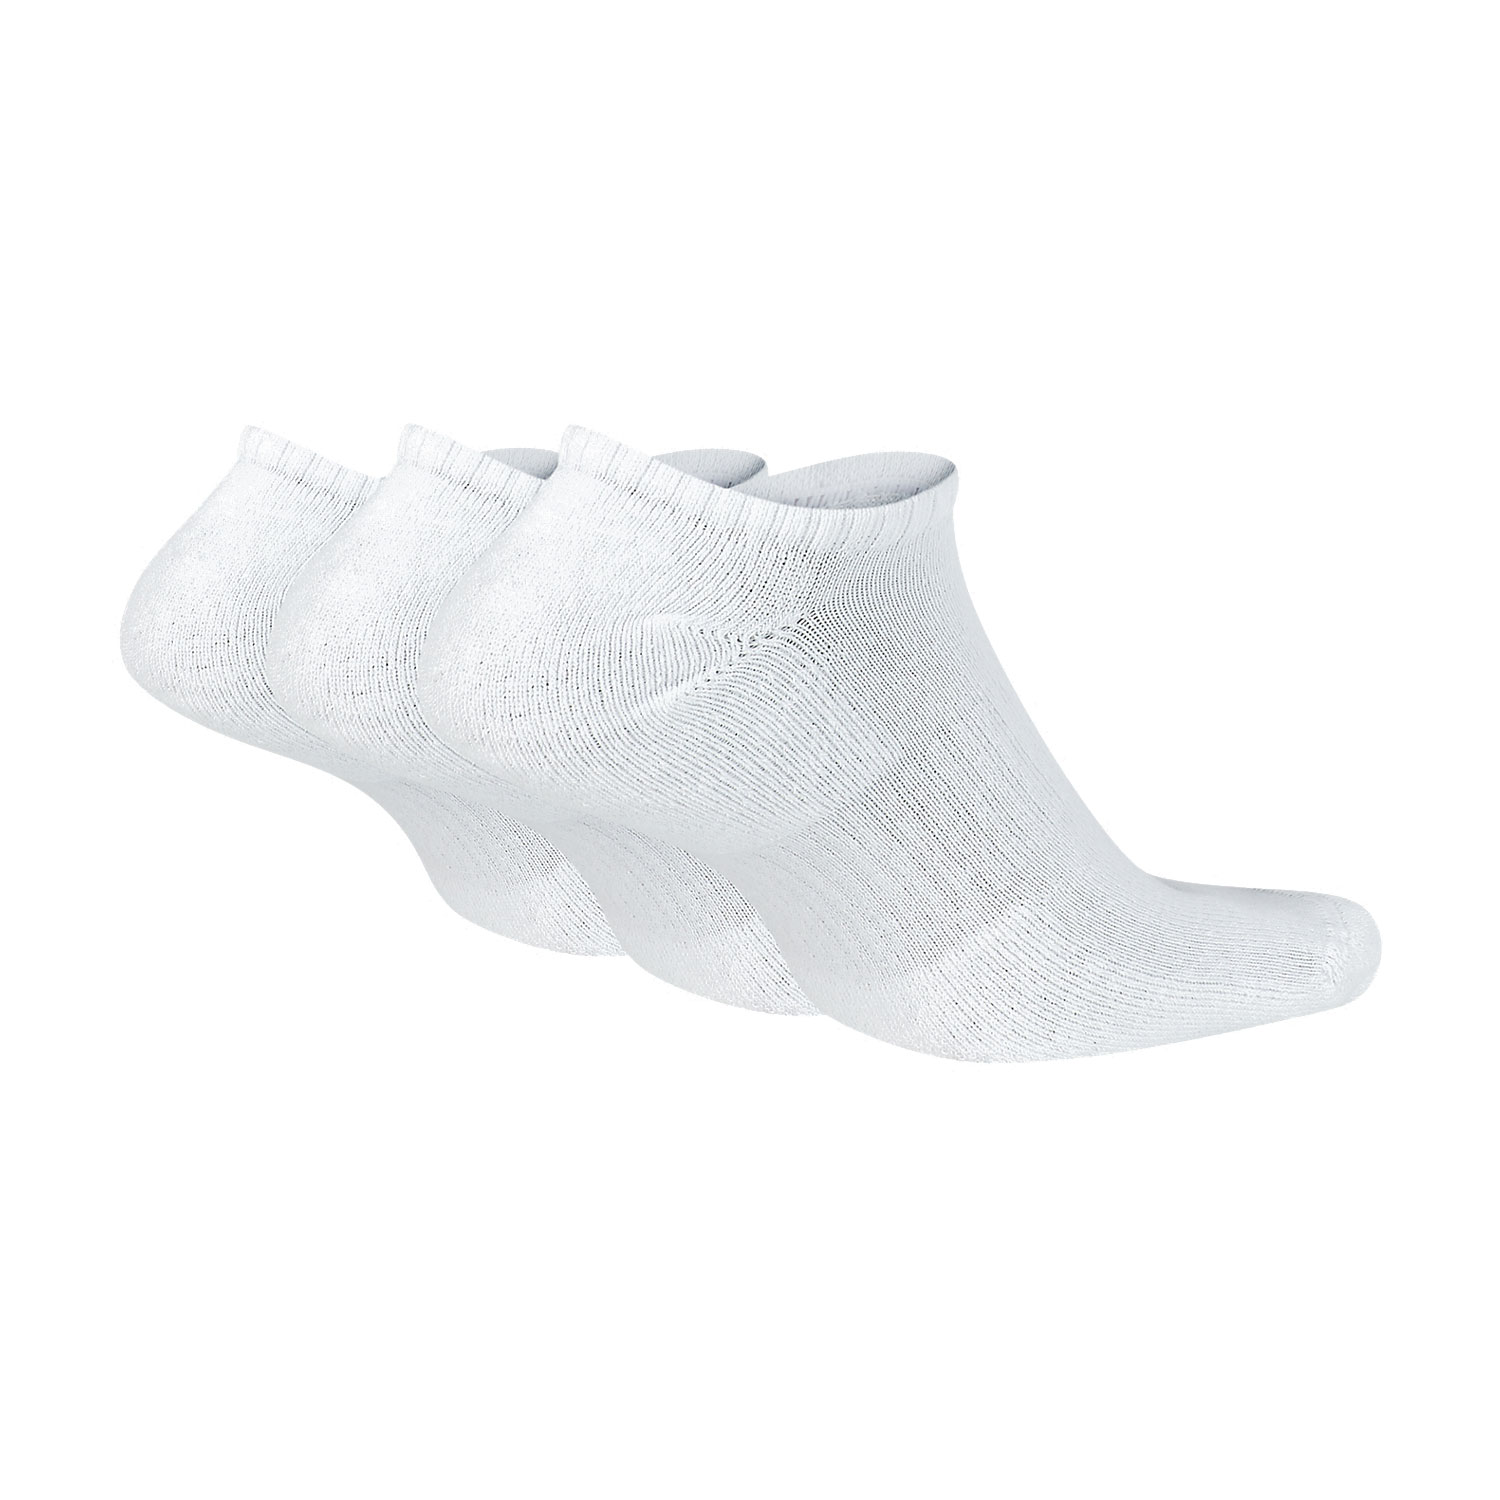 Nike Everyday Cush x 3 Socks - White/Black